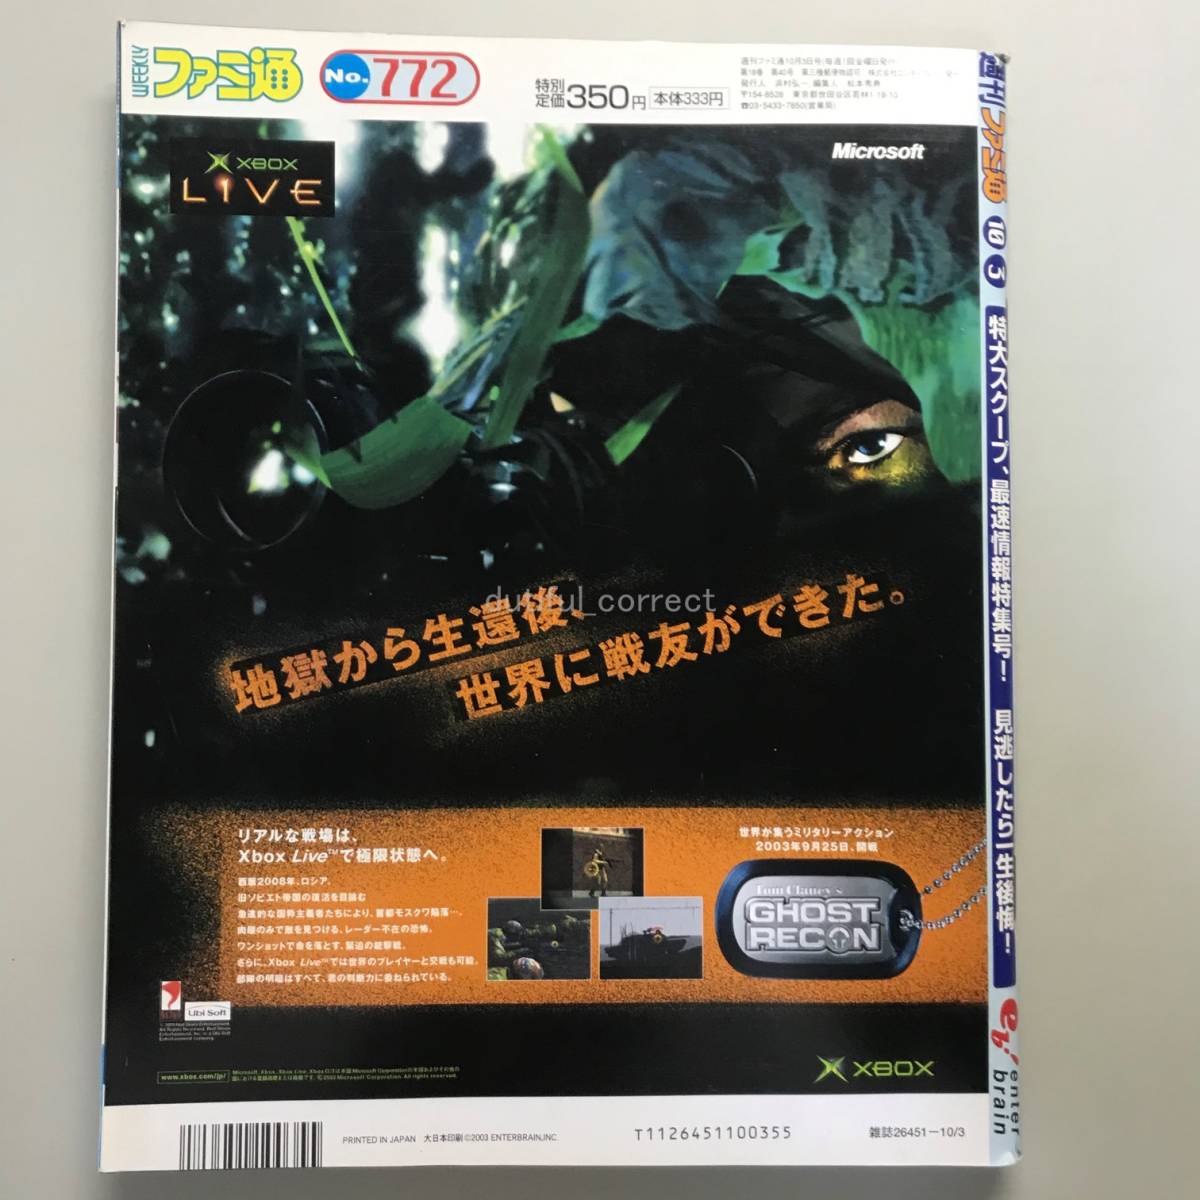 【WEEKLY ファミ通 2003年】 No.772 メロディクリップ ファミコン TV ゲーム 総合情報誌 雑誌 Weekly Game Magazine_画像9